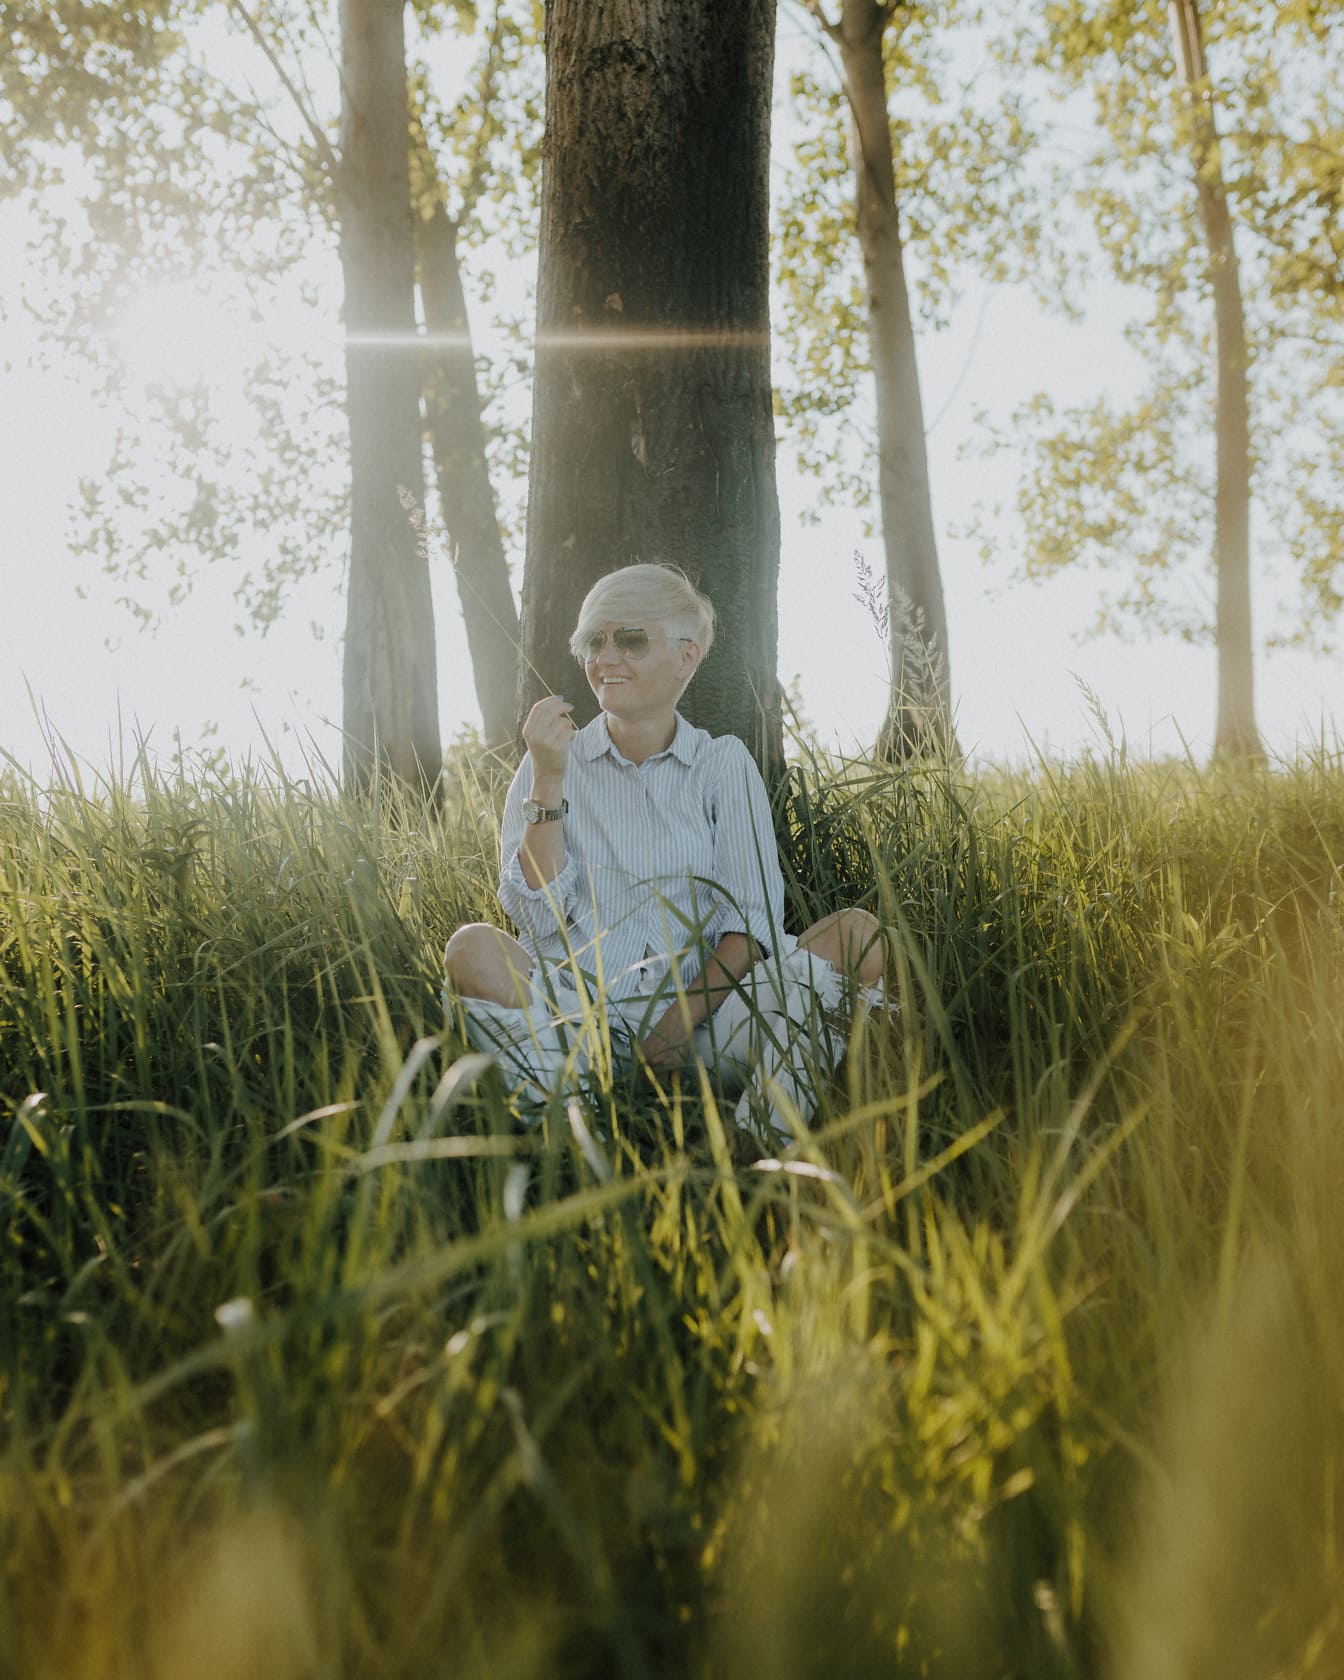 Pirang duduk di padang rumput dan tersenyum dengan sinar matahari di latar belakang